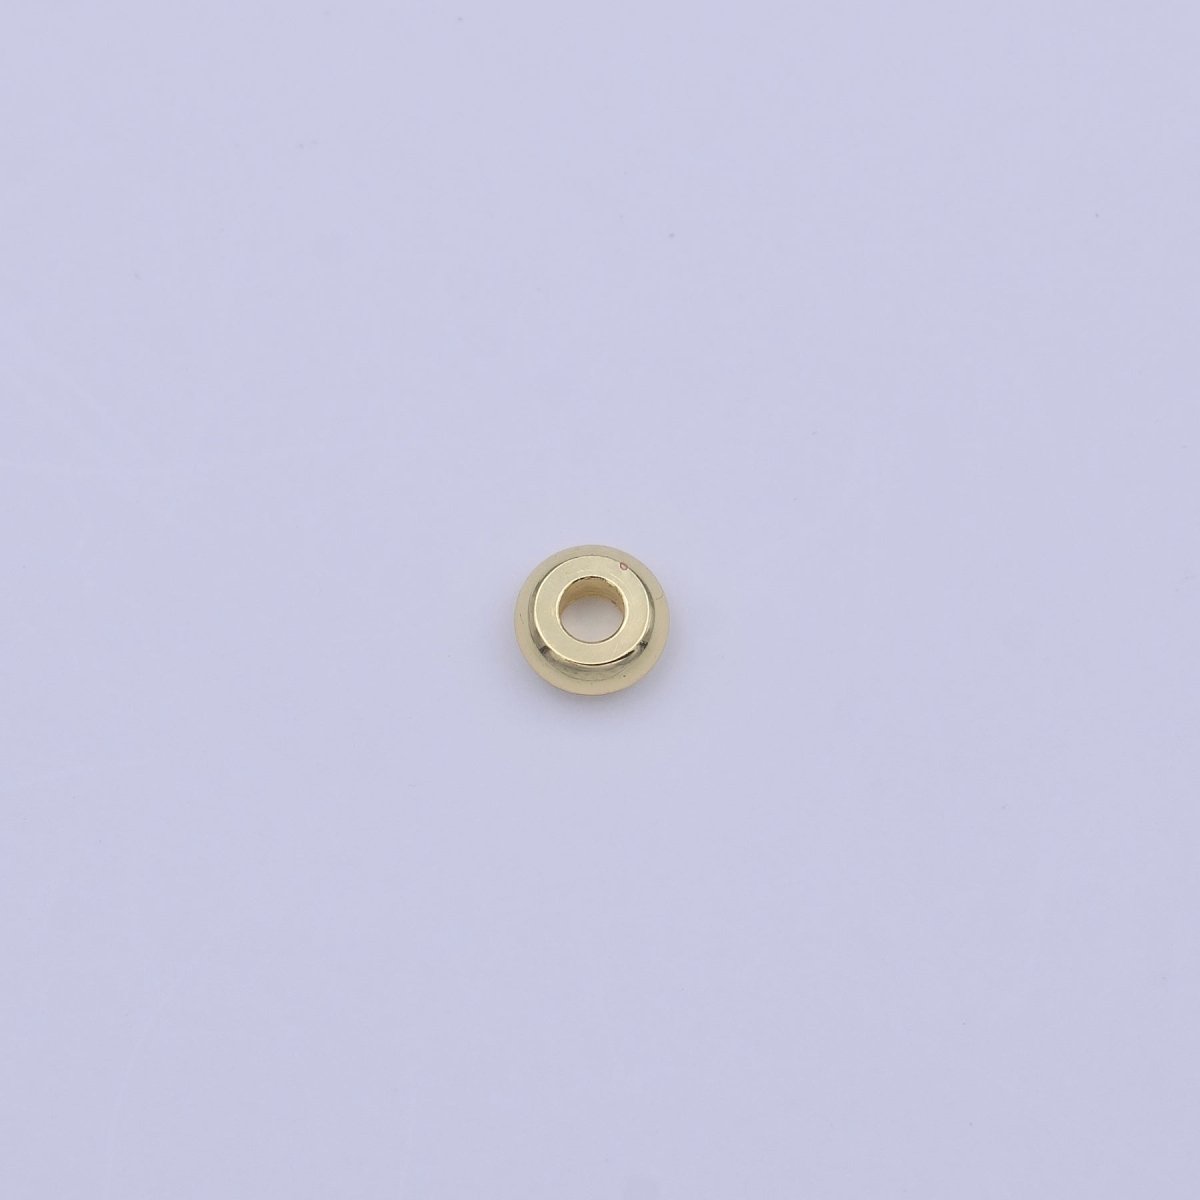 50 Pieces Gold Thin 3mm, 4mm, 5mm, 6mm, 7mm, 8mm Spacer Bead Jewelry Making Supply | B-145 B-498 B-220 B-499 B-502 B-603 - DLUXCA